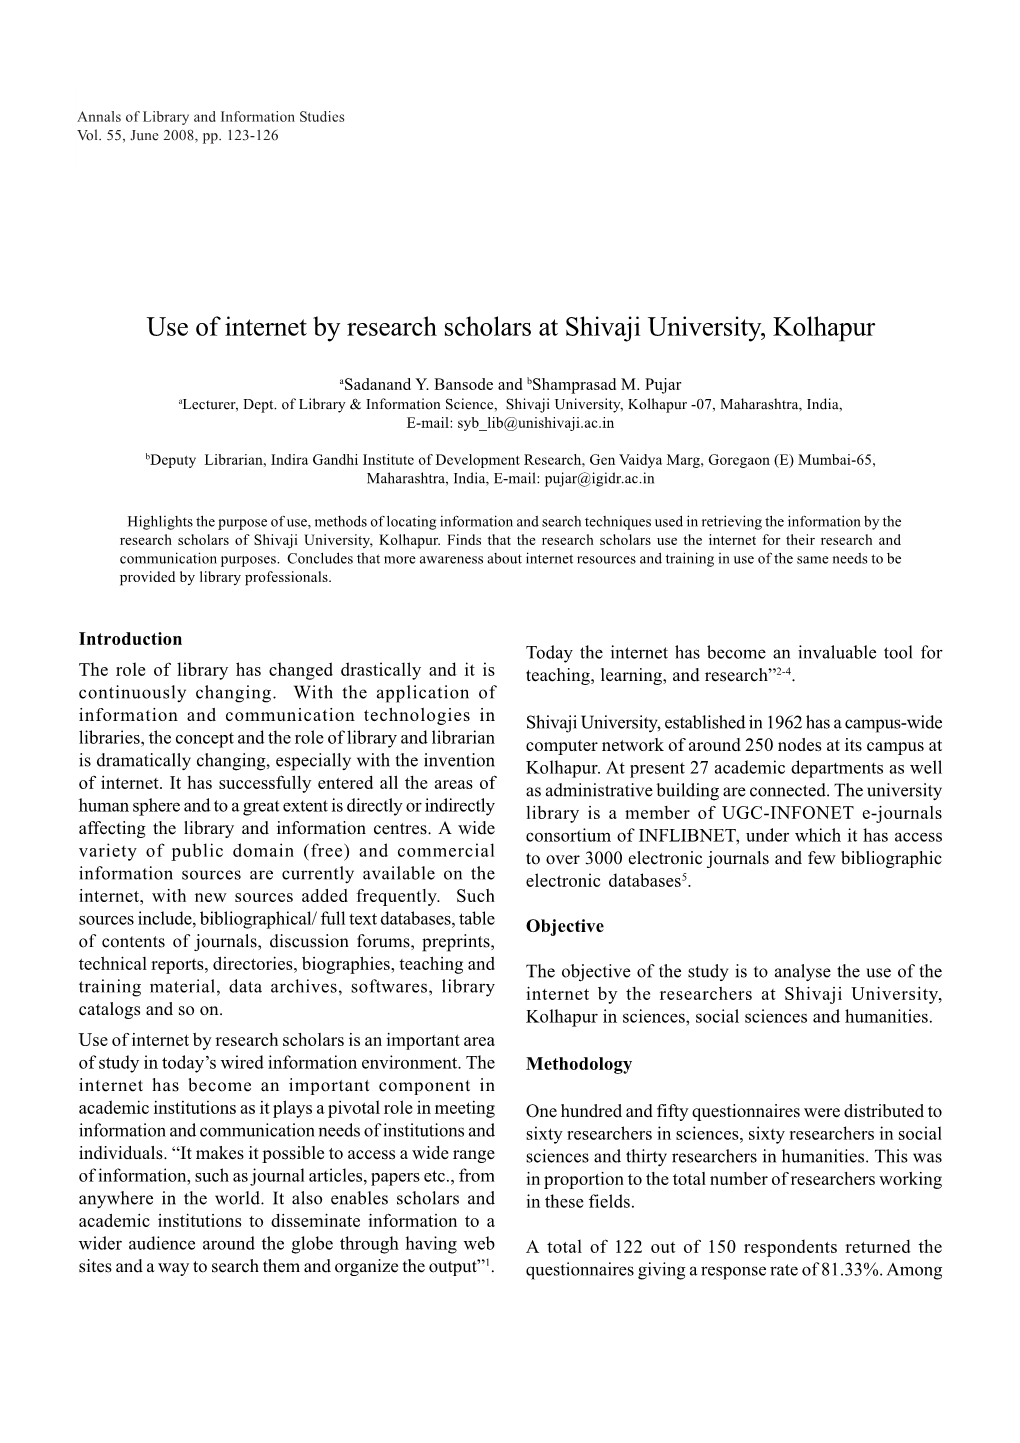 Use of Internet by Research Scholars at Shivaji University, Kolhapur 123